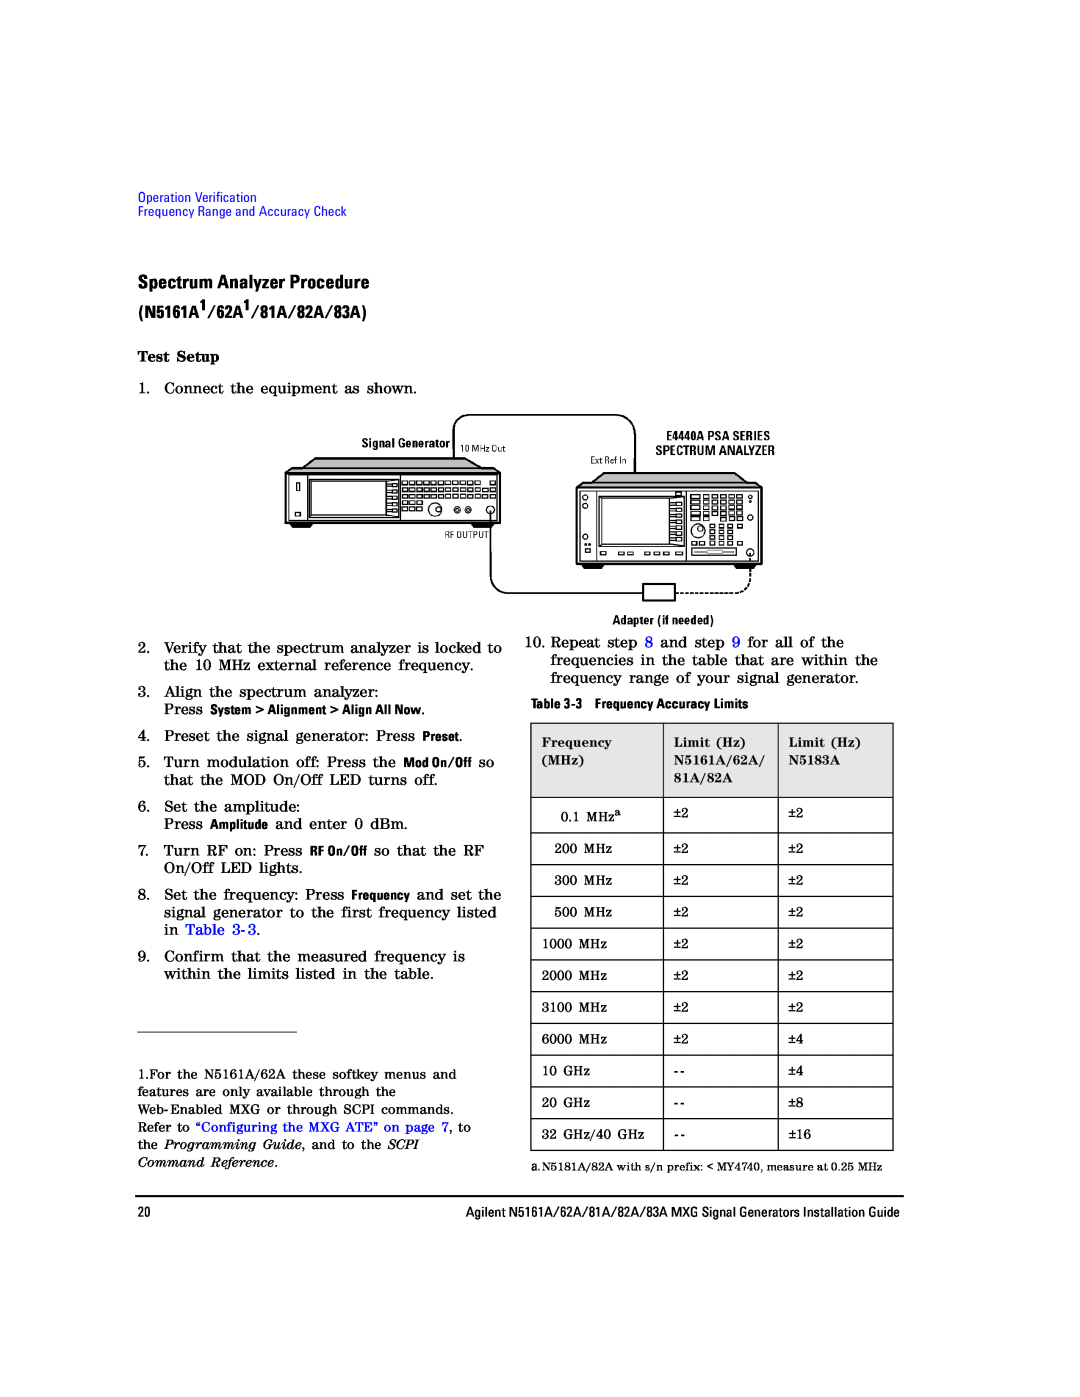 Agilent Technologies manual Spectrum Analyzer Procedure, N5161A1/62A1/81A/82A/83A 